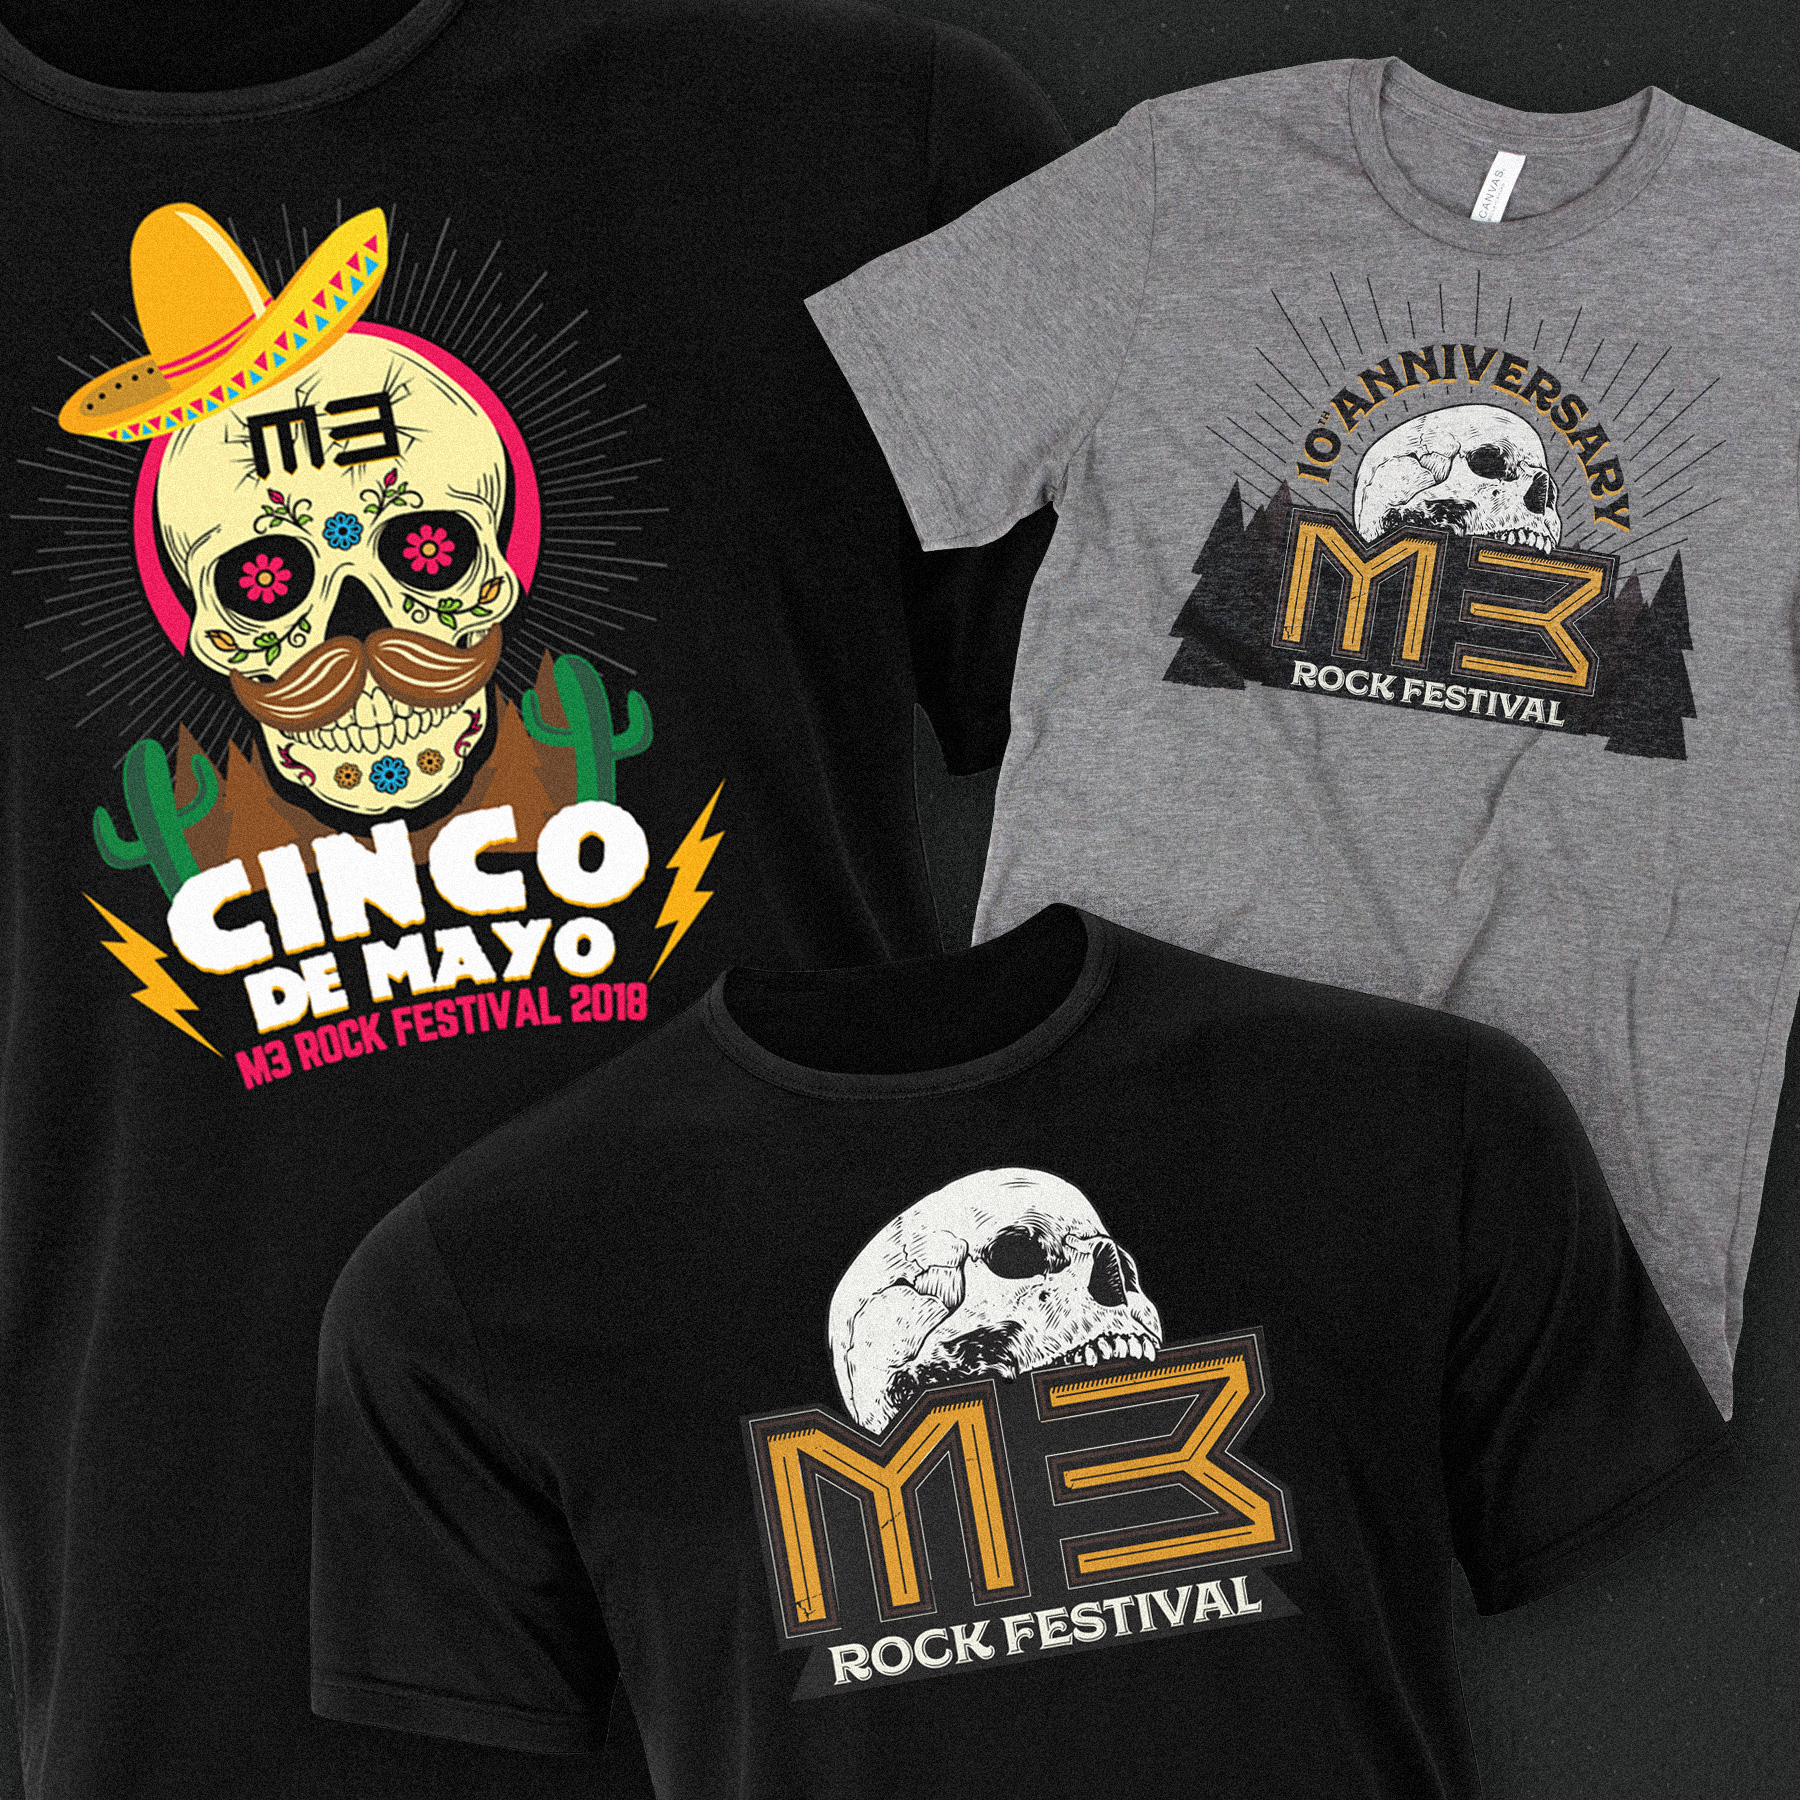 M3 Rock Festival Shirts